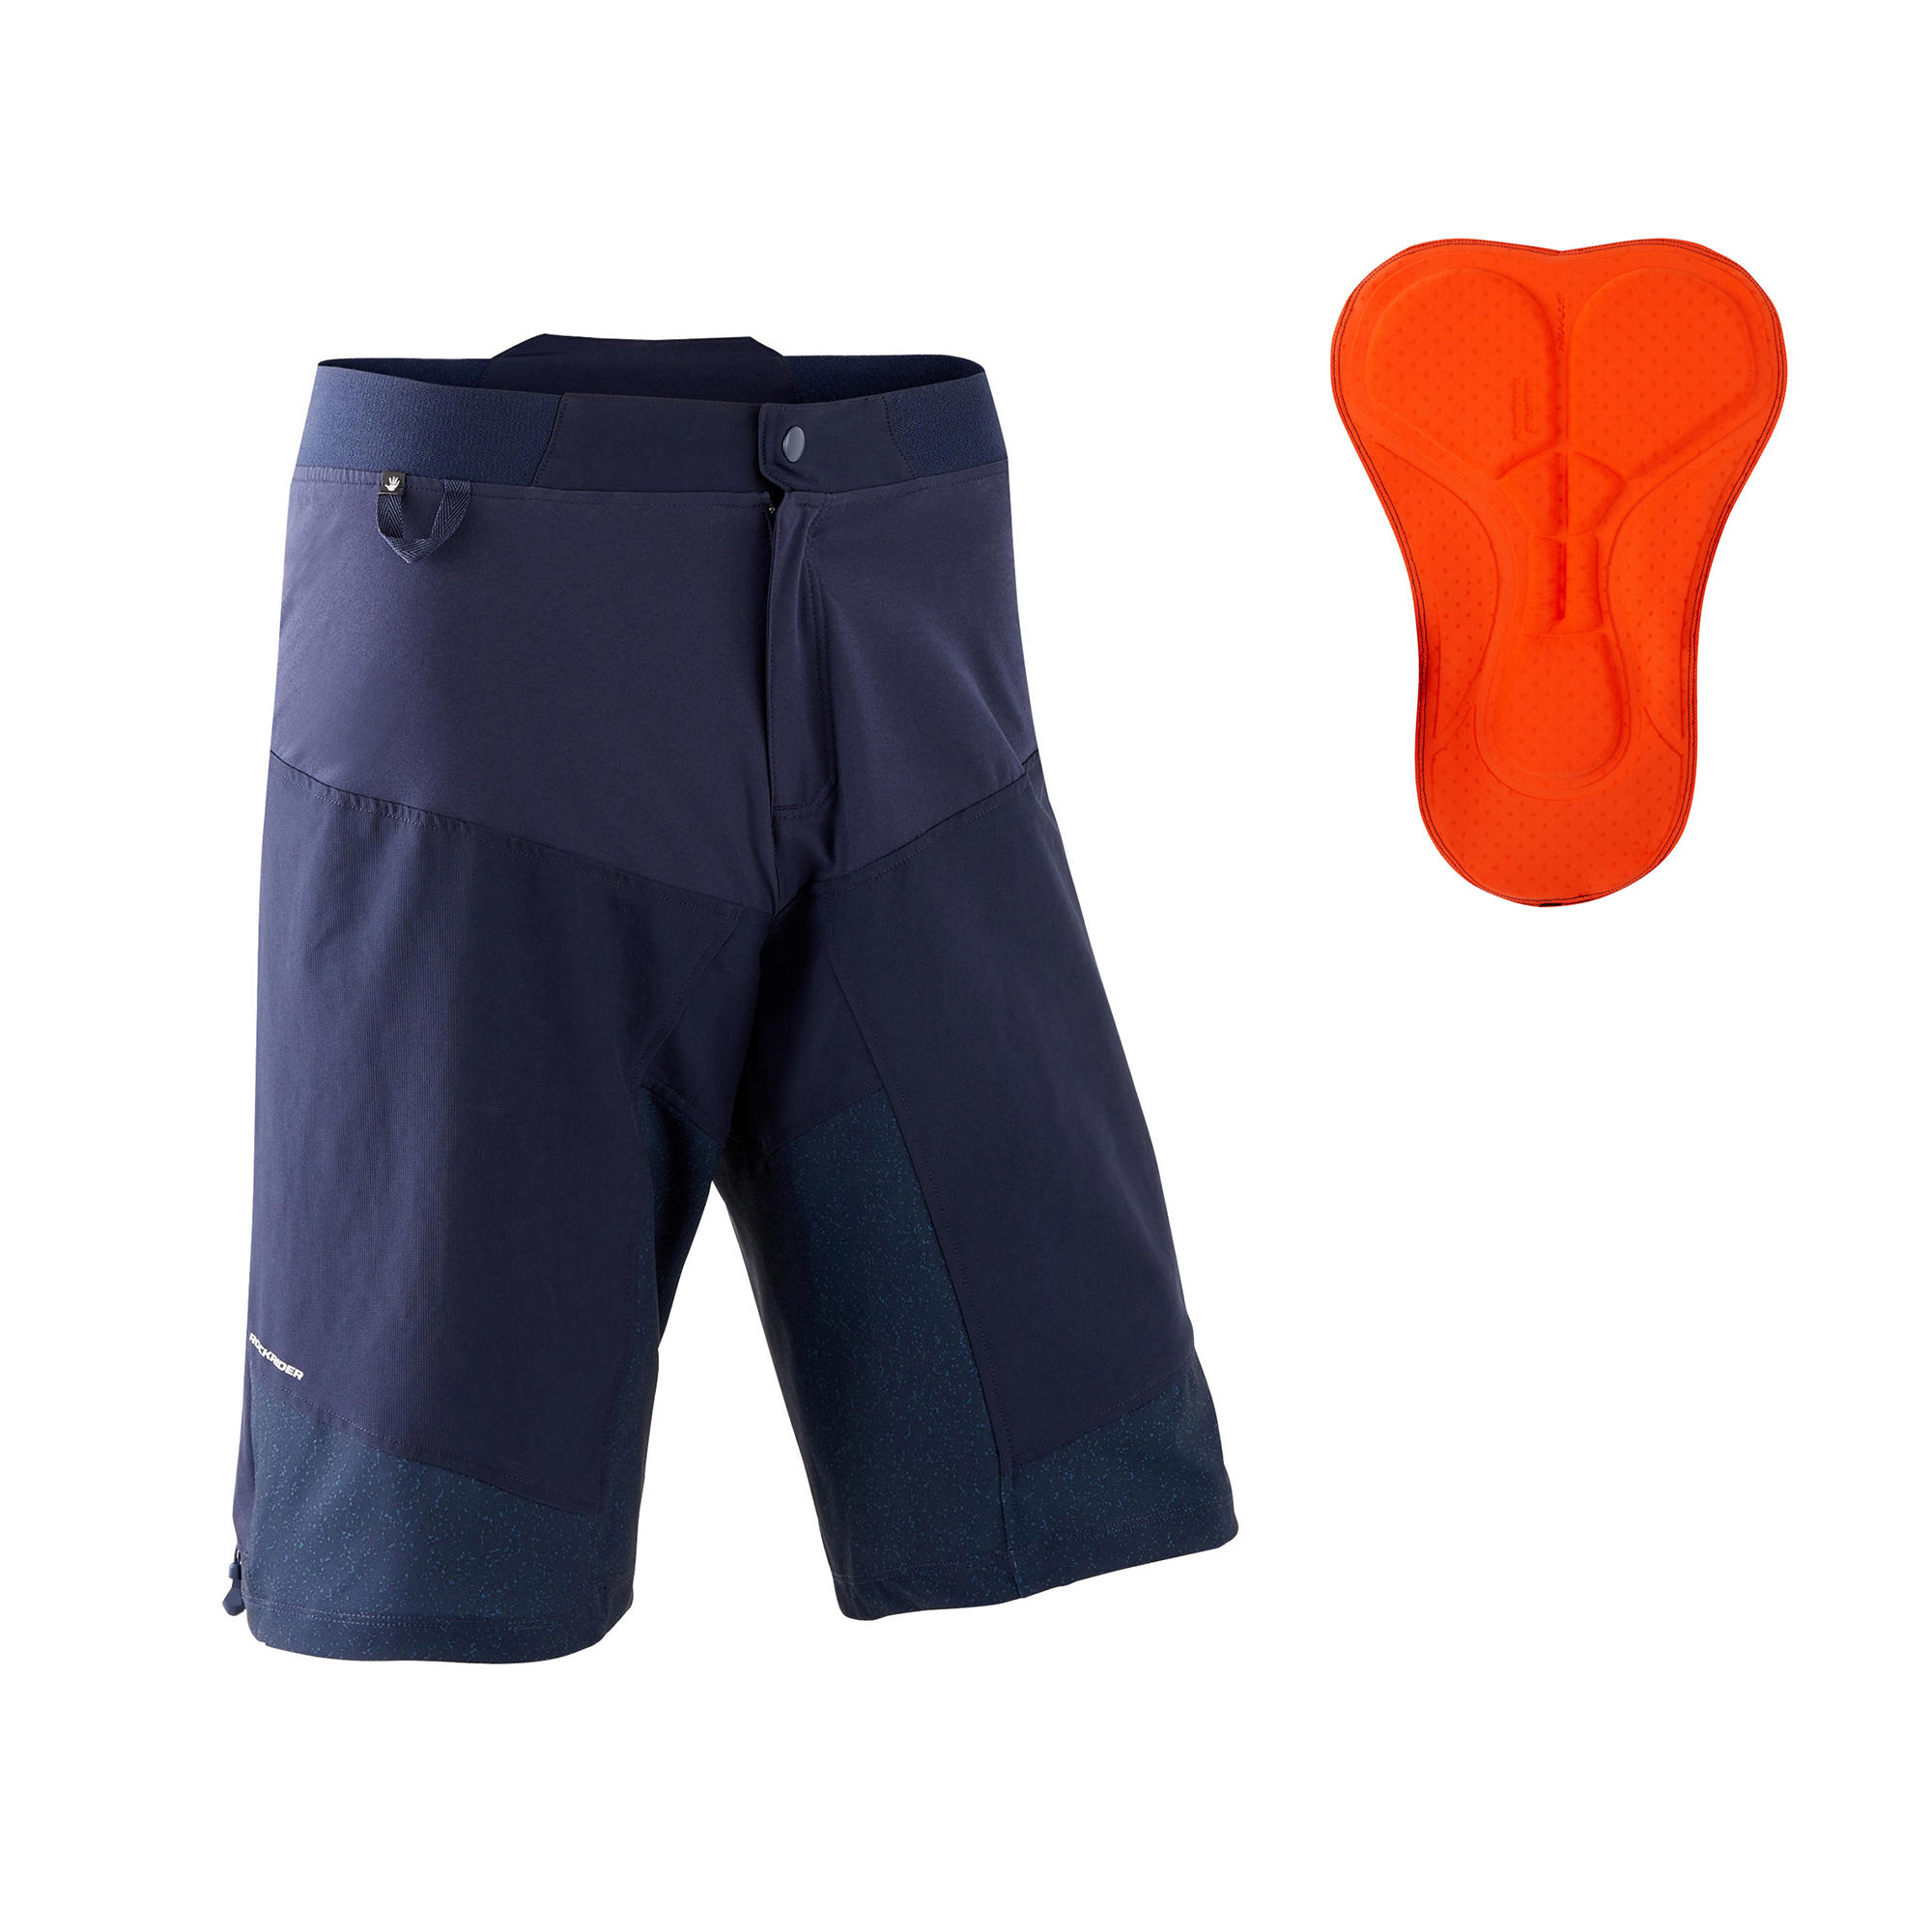 ROCKRIDER Mountain Biking Shorts - Navy